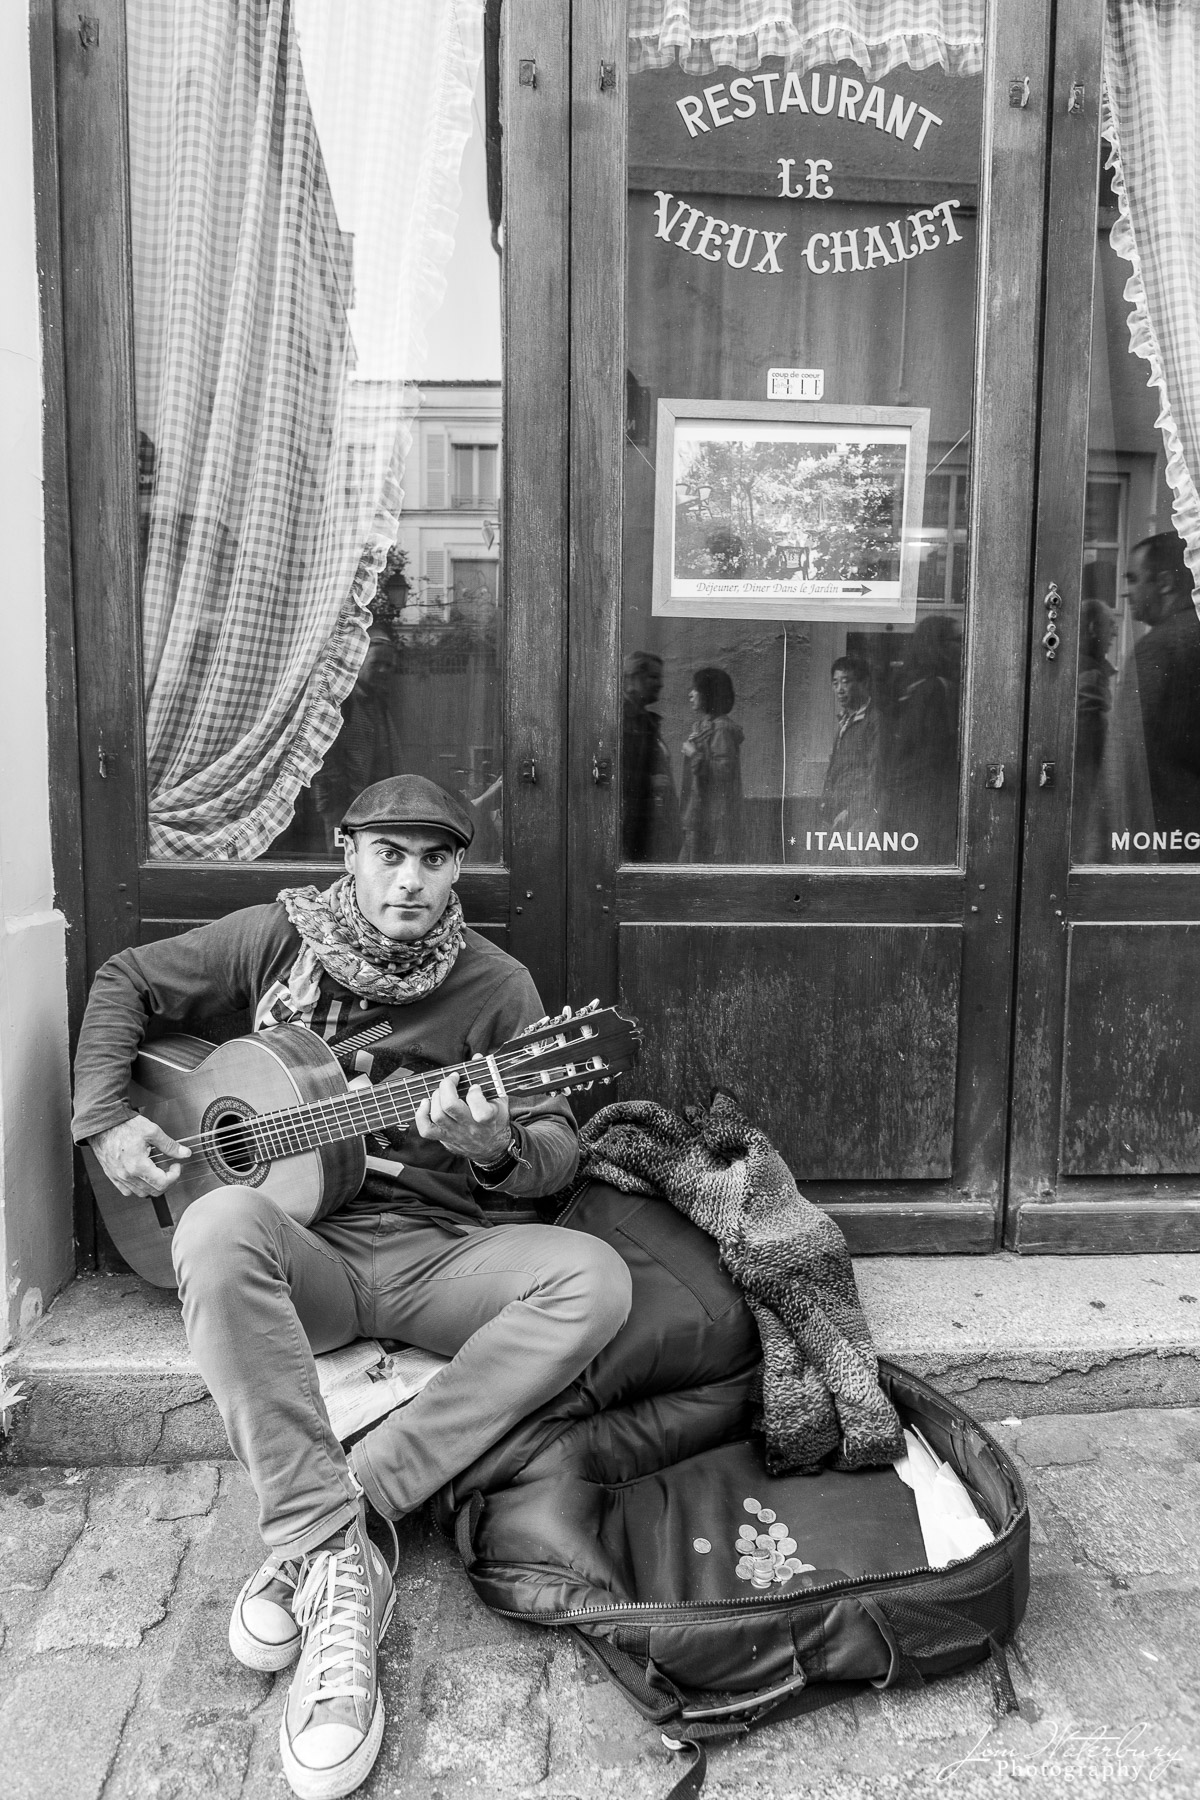 Singer working the sidewalks in Monmartre, Paris.